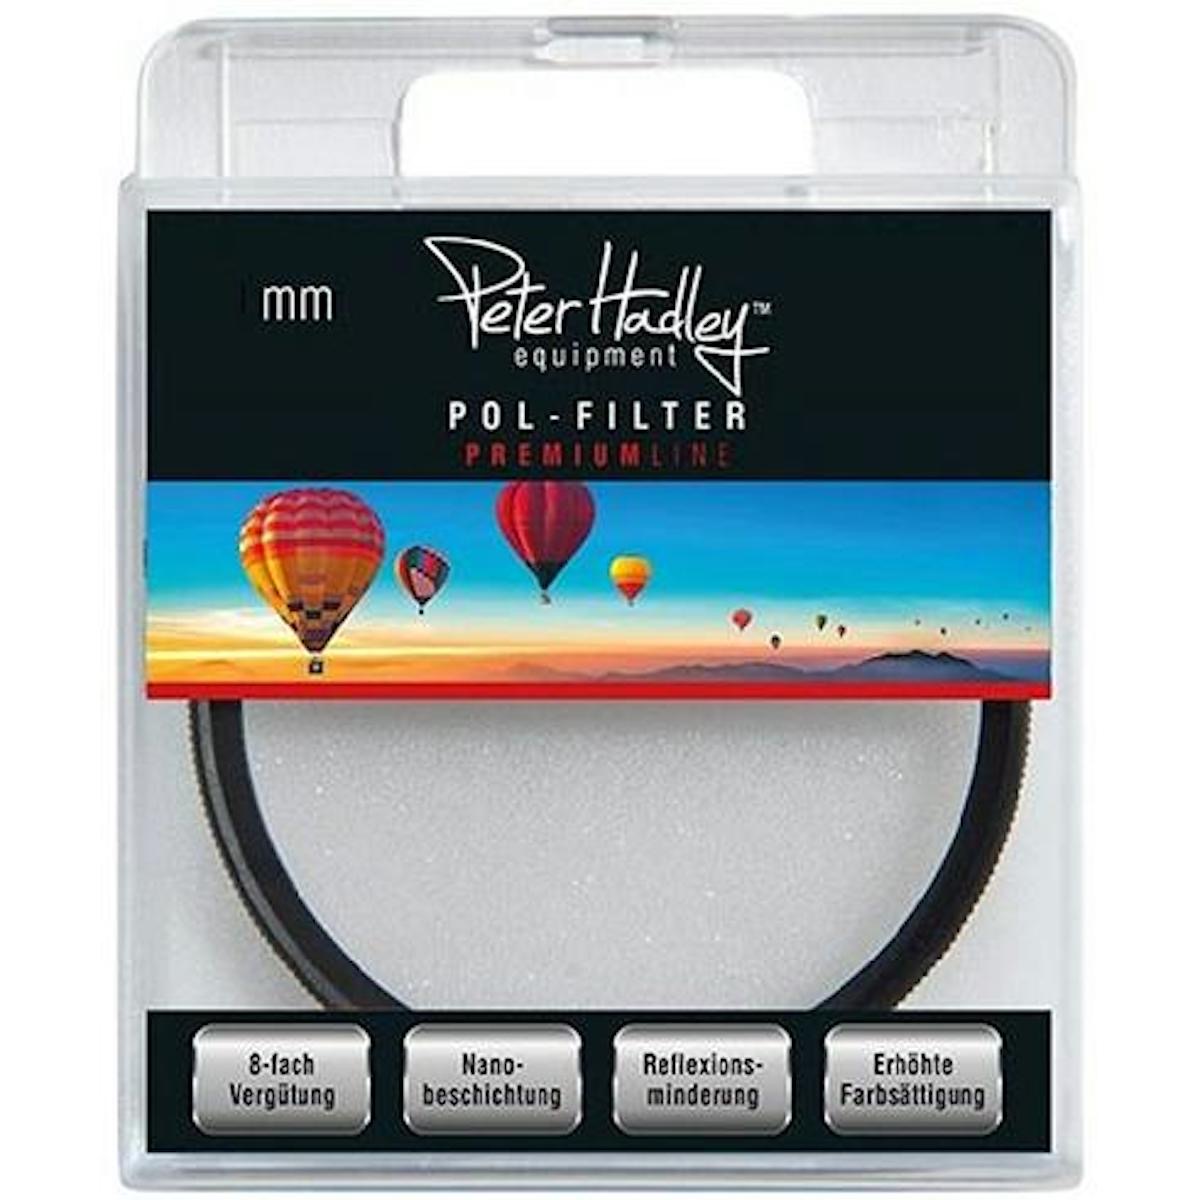 Peter Hadley Polfilter 49mm